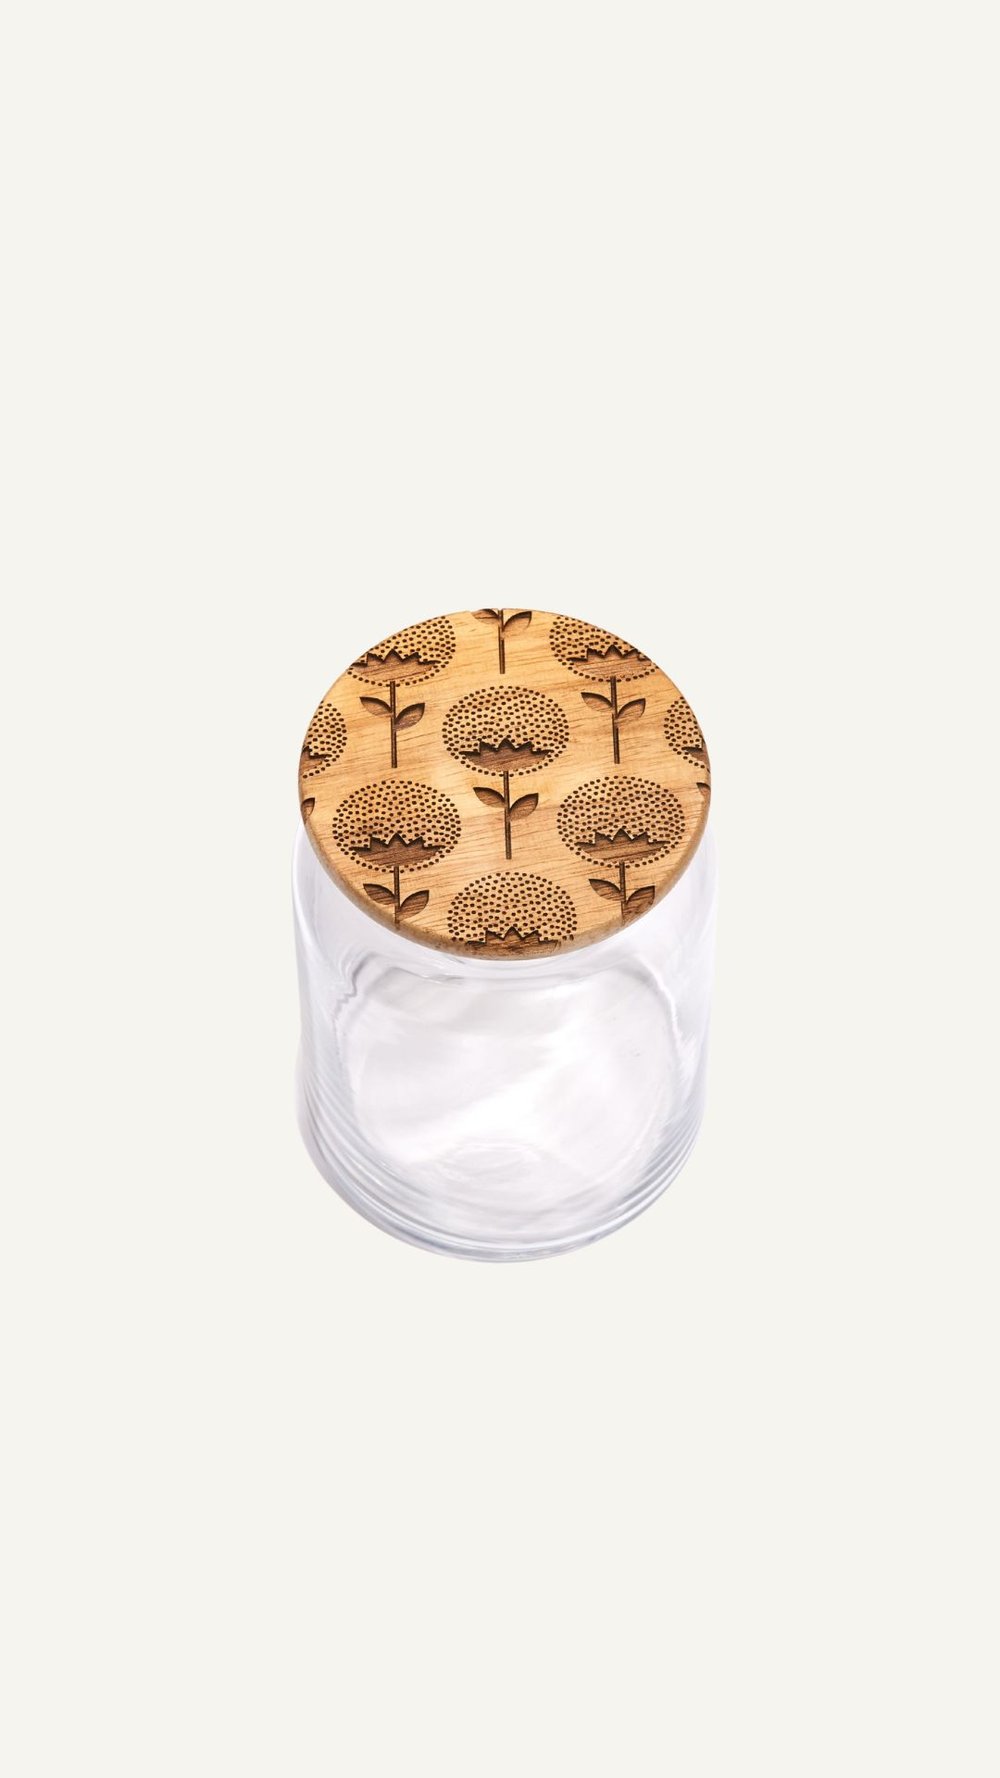 Boca tall glass jar - wooden lid with flower - Curiosa Cabinet